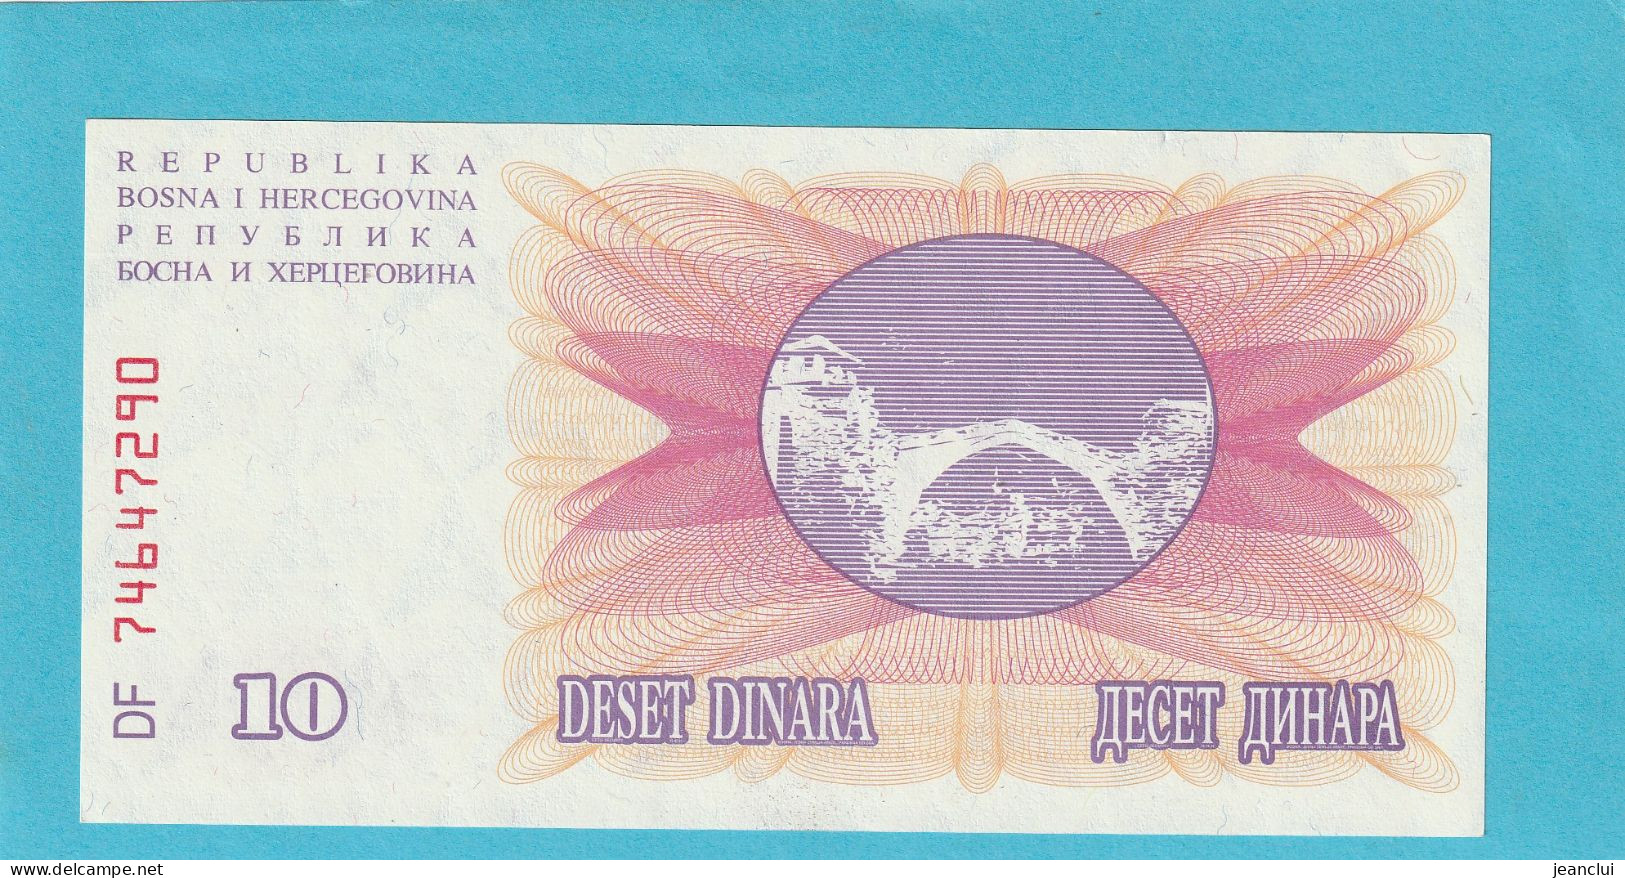 NARODNA BANKA BOSNE I HERCEGOVINE  .  10 DINARA  . 1-7-1992  .  N°  746 472 90  .  2 SCANNES  .  BILLET EN TRES BEL ETAT - Bosnia And Herzegovina